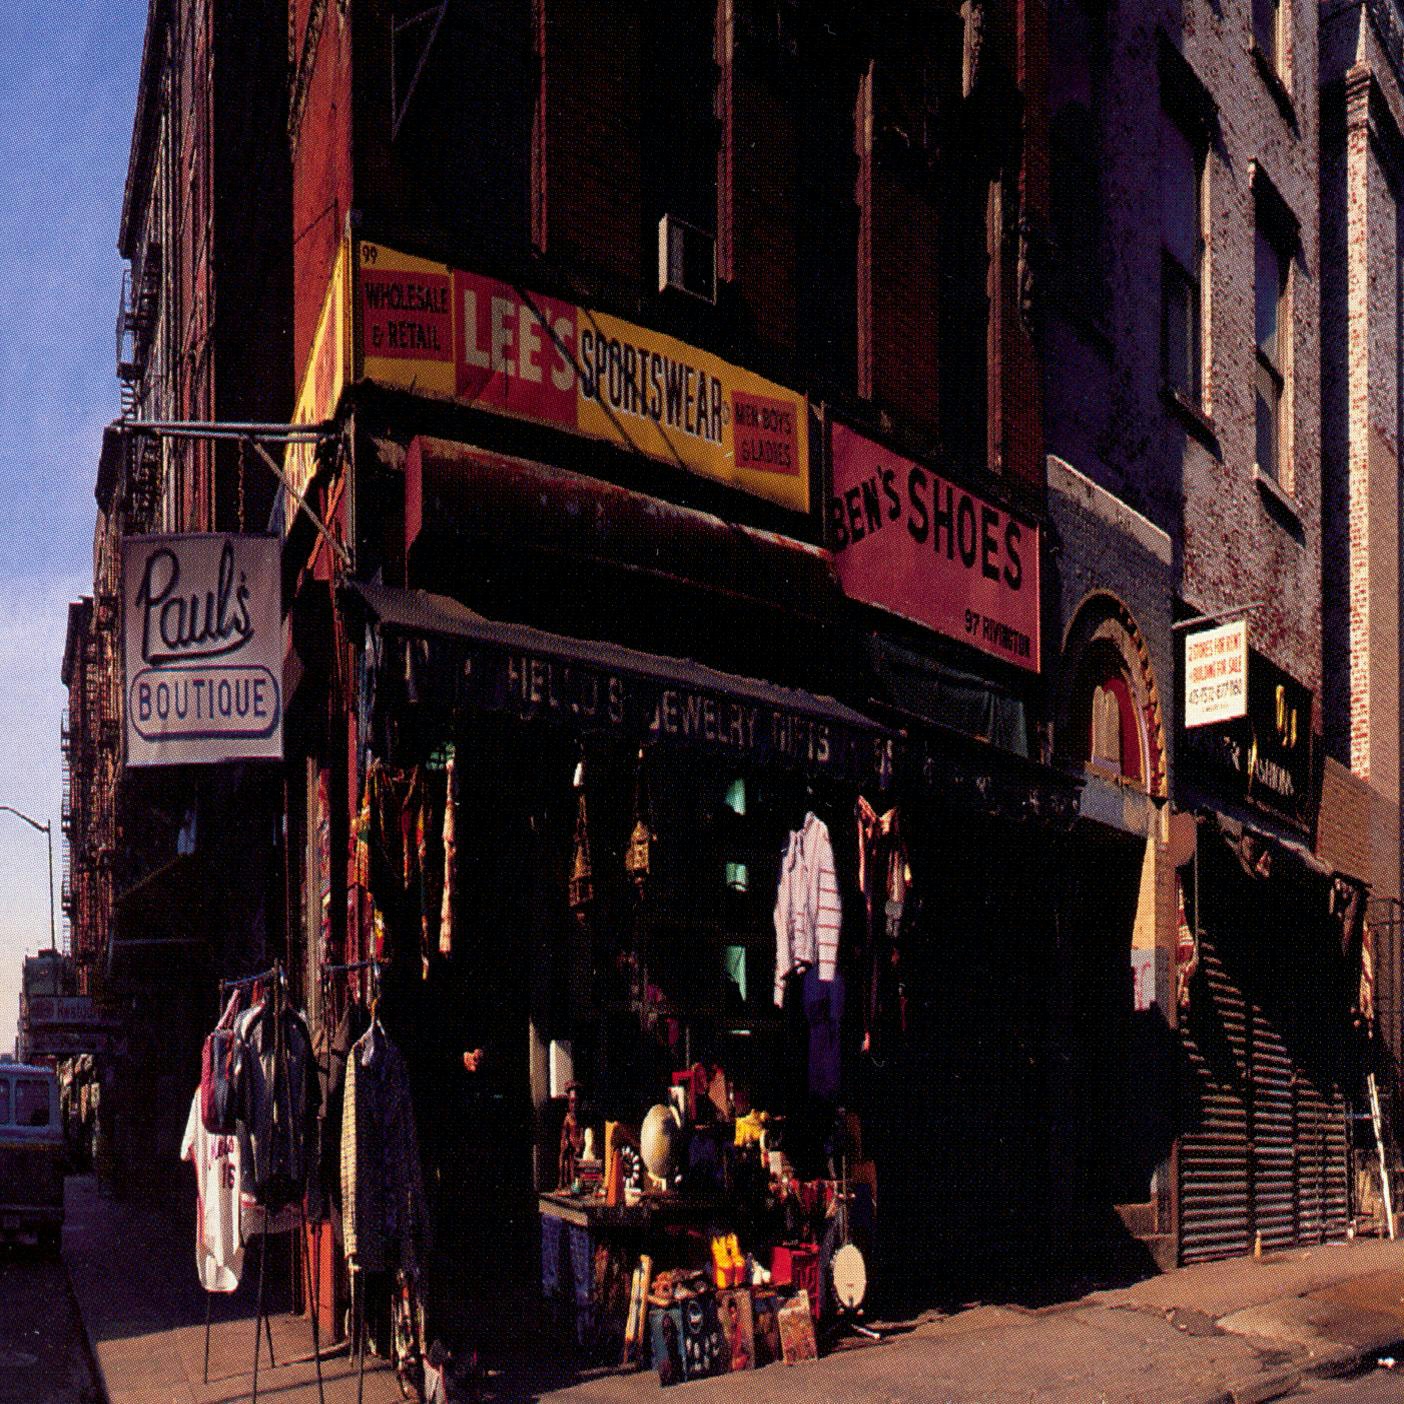 Album artwork for Album artwork for Paul's Boutique by Beastie Boys by Paul's Boutique - Beastie Boys